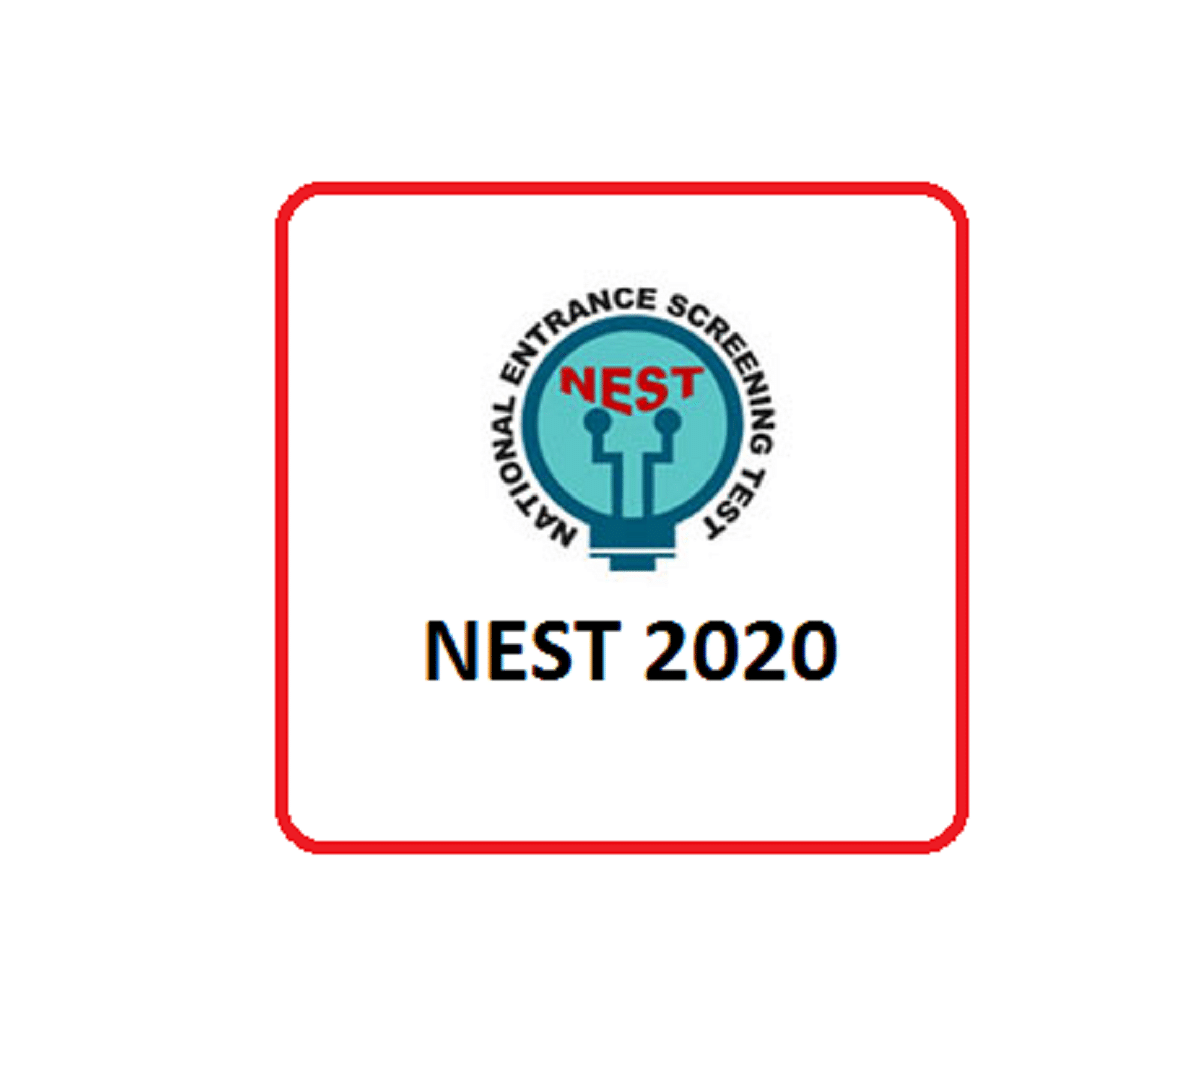 NEST 2020 in September, Follow This Exam Pattern to Score Better